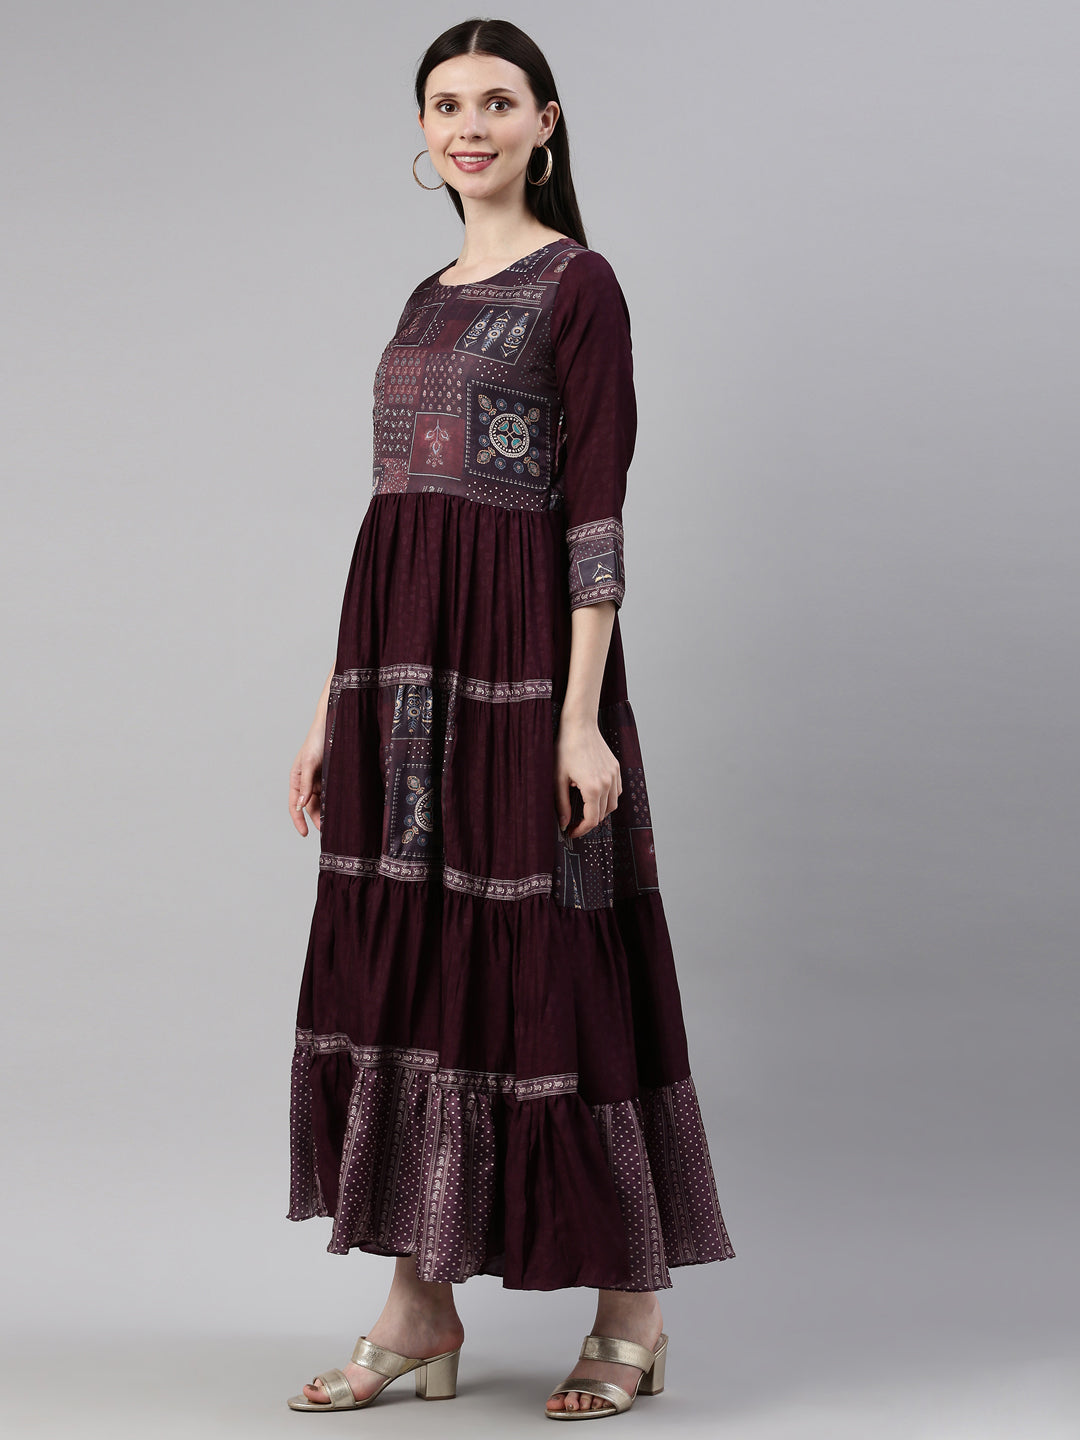 Neeru's Purple Color Silk Fabric Gown